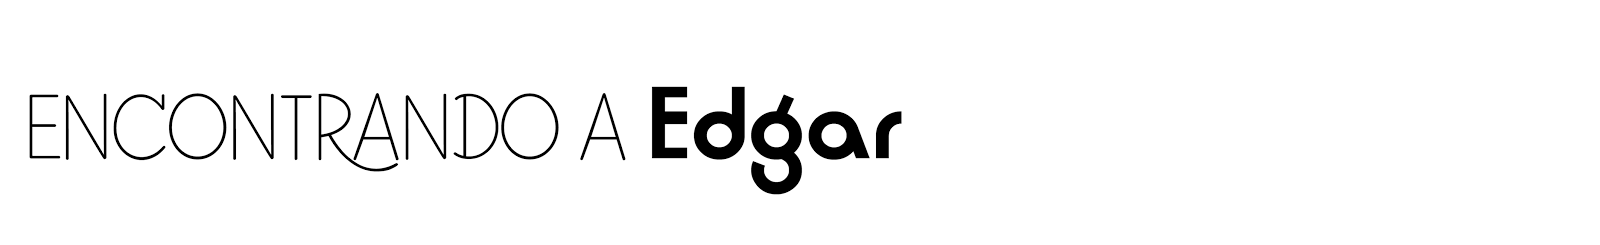 Encontrando a Edgar